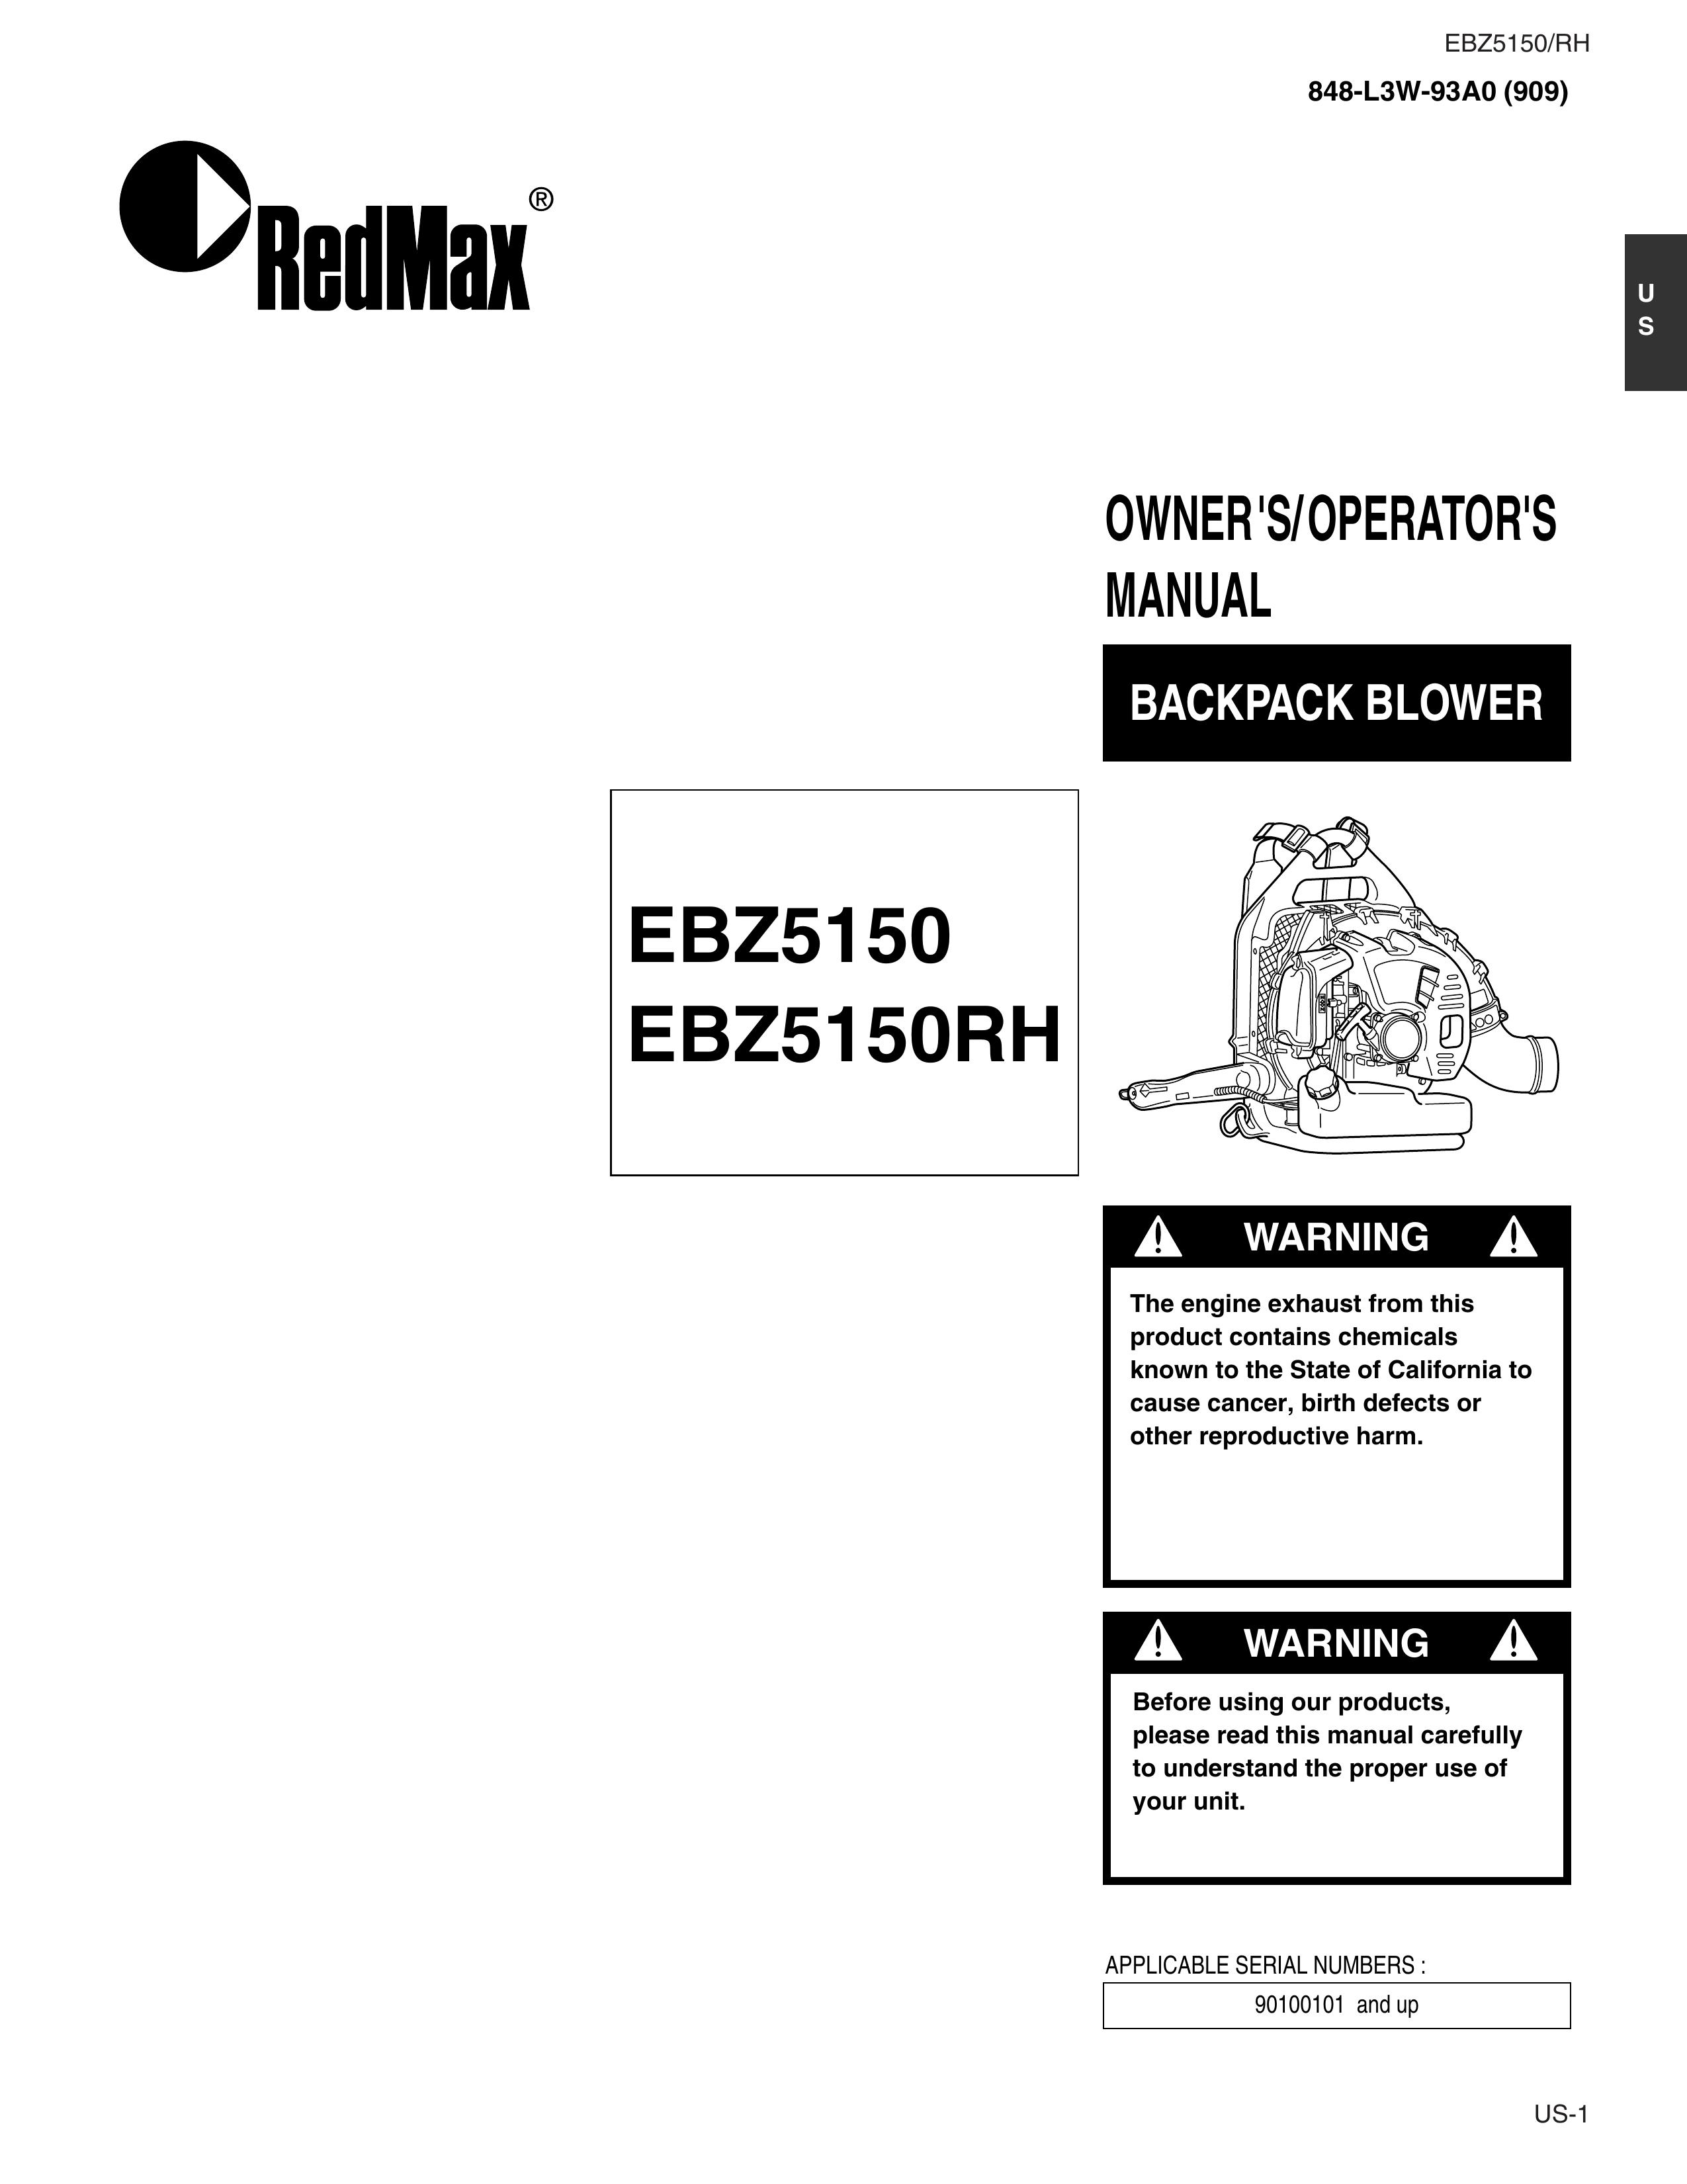 RedMax EBZ5150RH Blower User Manual